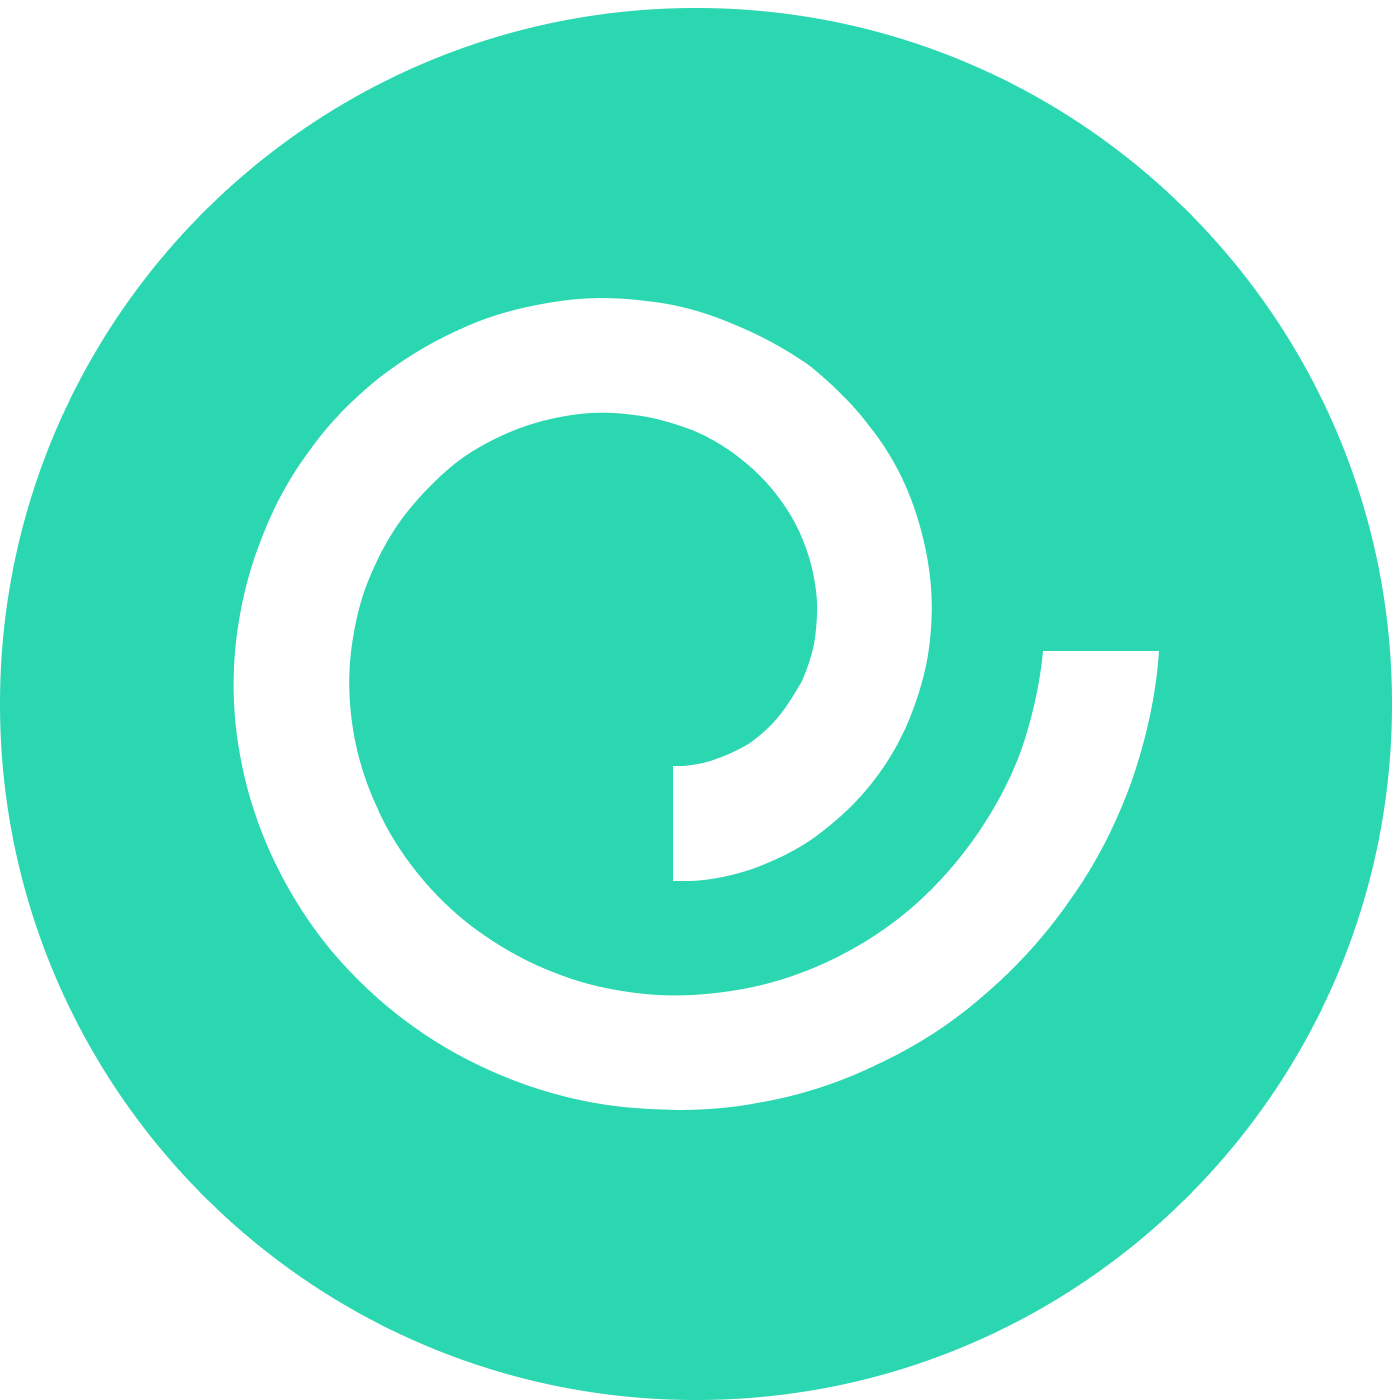 Every.org logo image